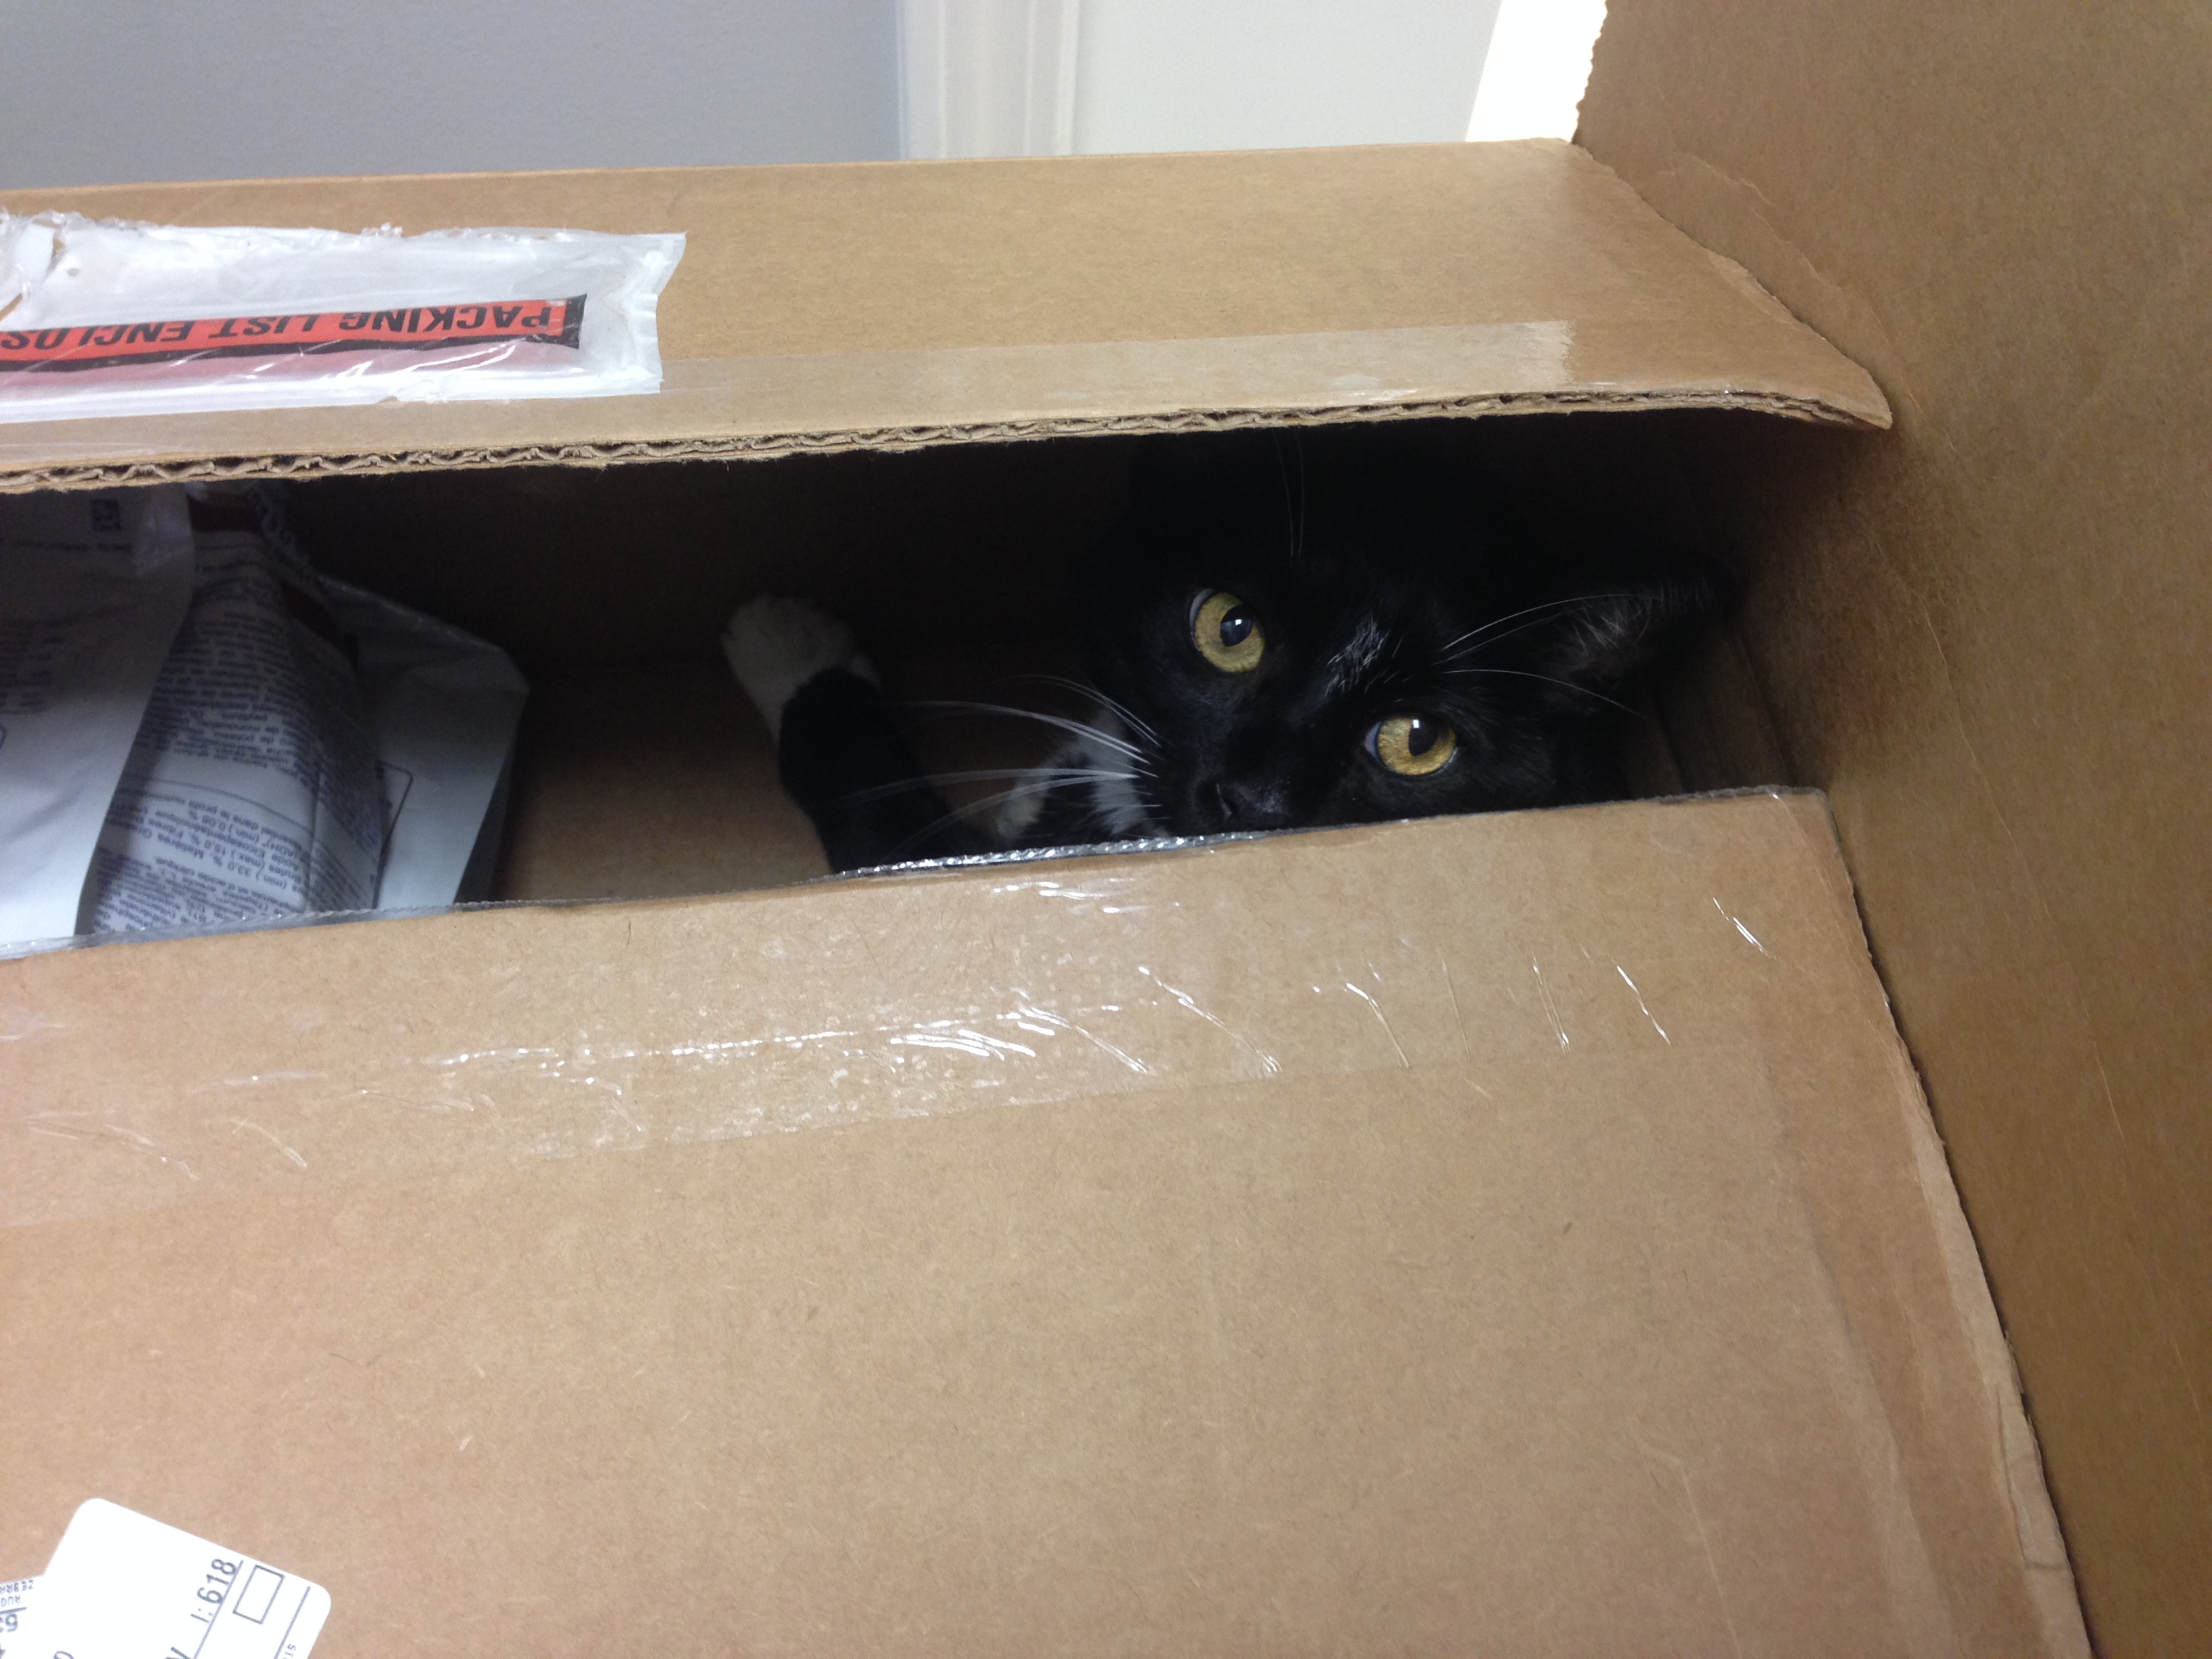 Parker has a serious cardboard box addiction problem!